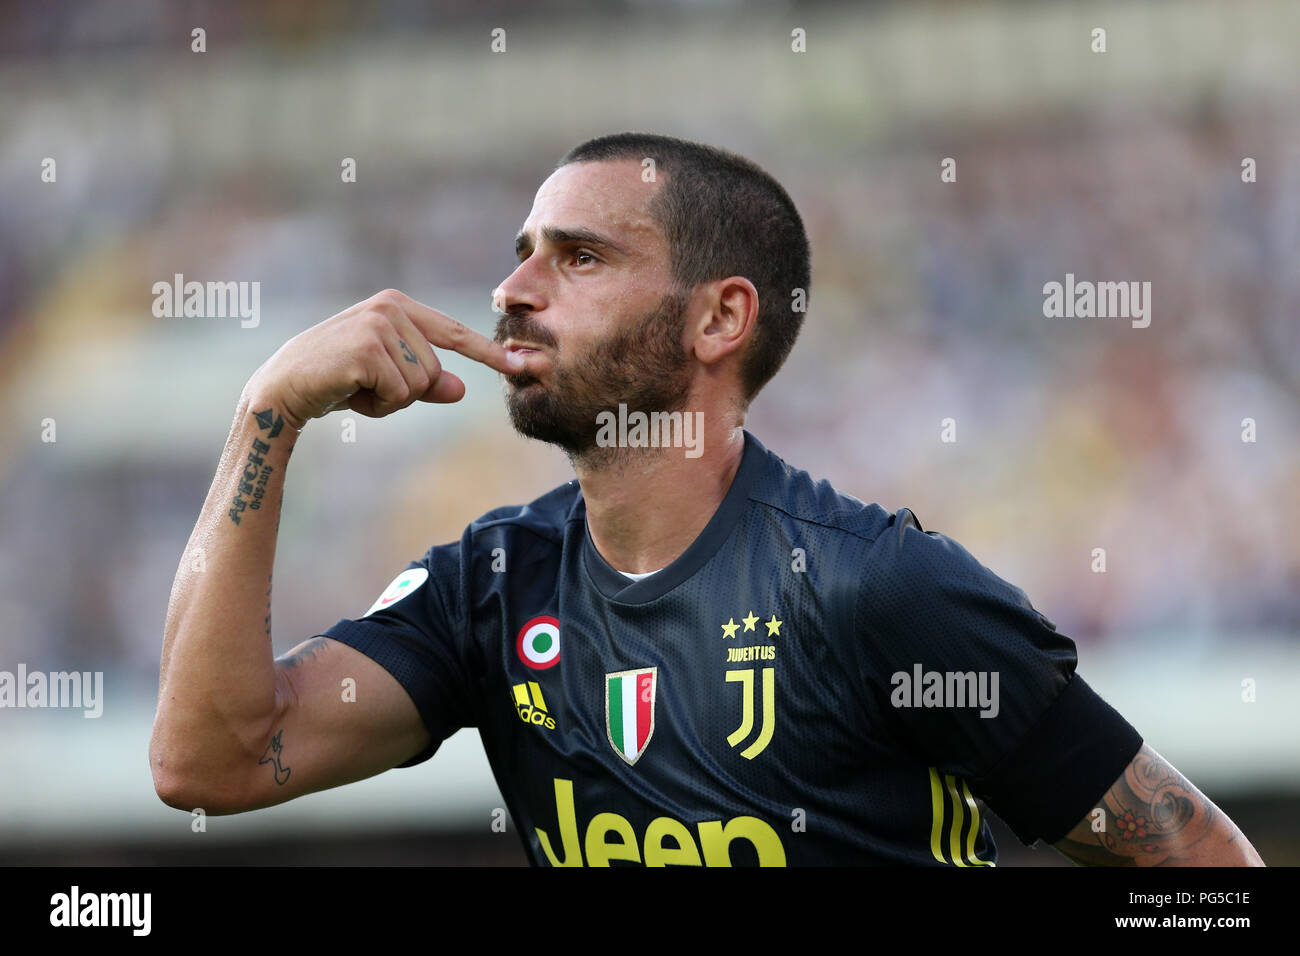 Leonardo Bonucci of Juventus FC celebrate after scoring a goal during the Serie A football match between Ac Chievo Verona and Juventus Fc. Stock Photo